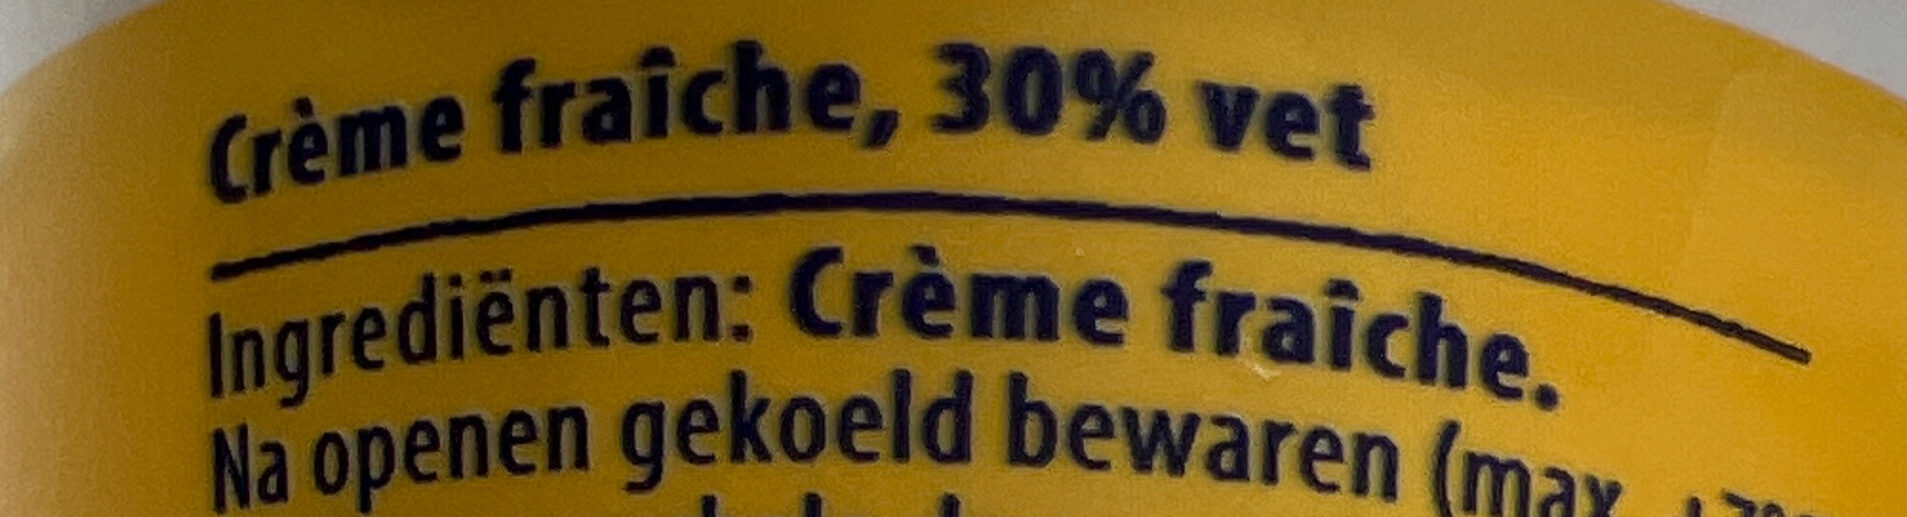 Crème fraiche naturel - Ingrediënten